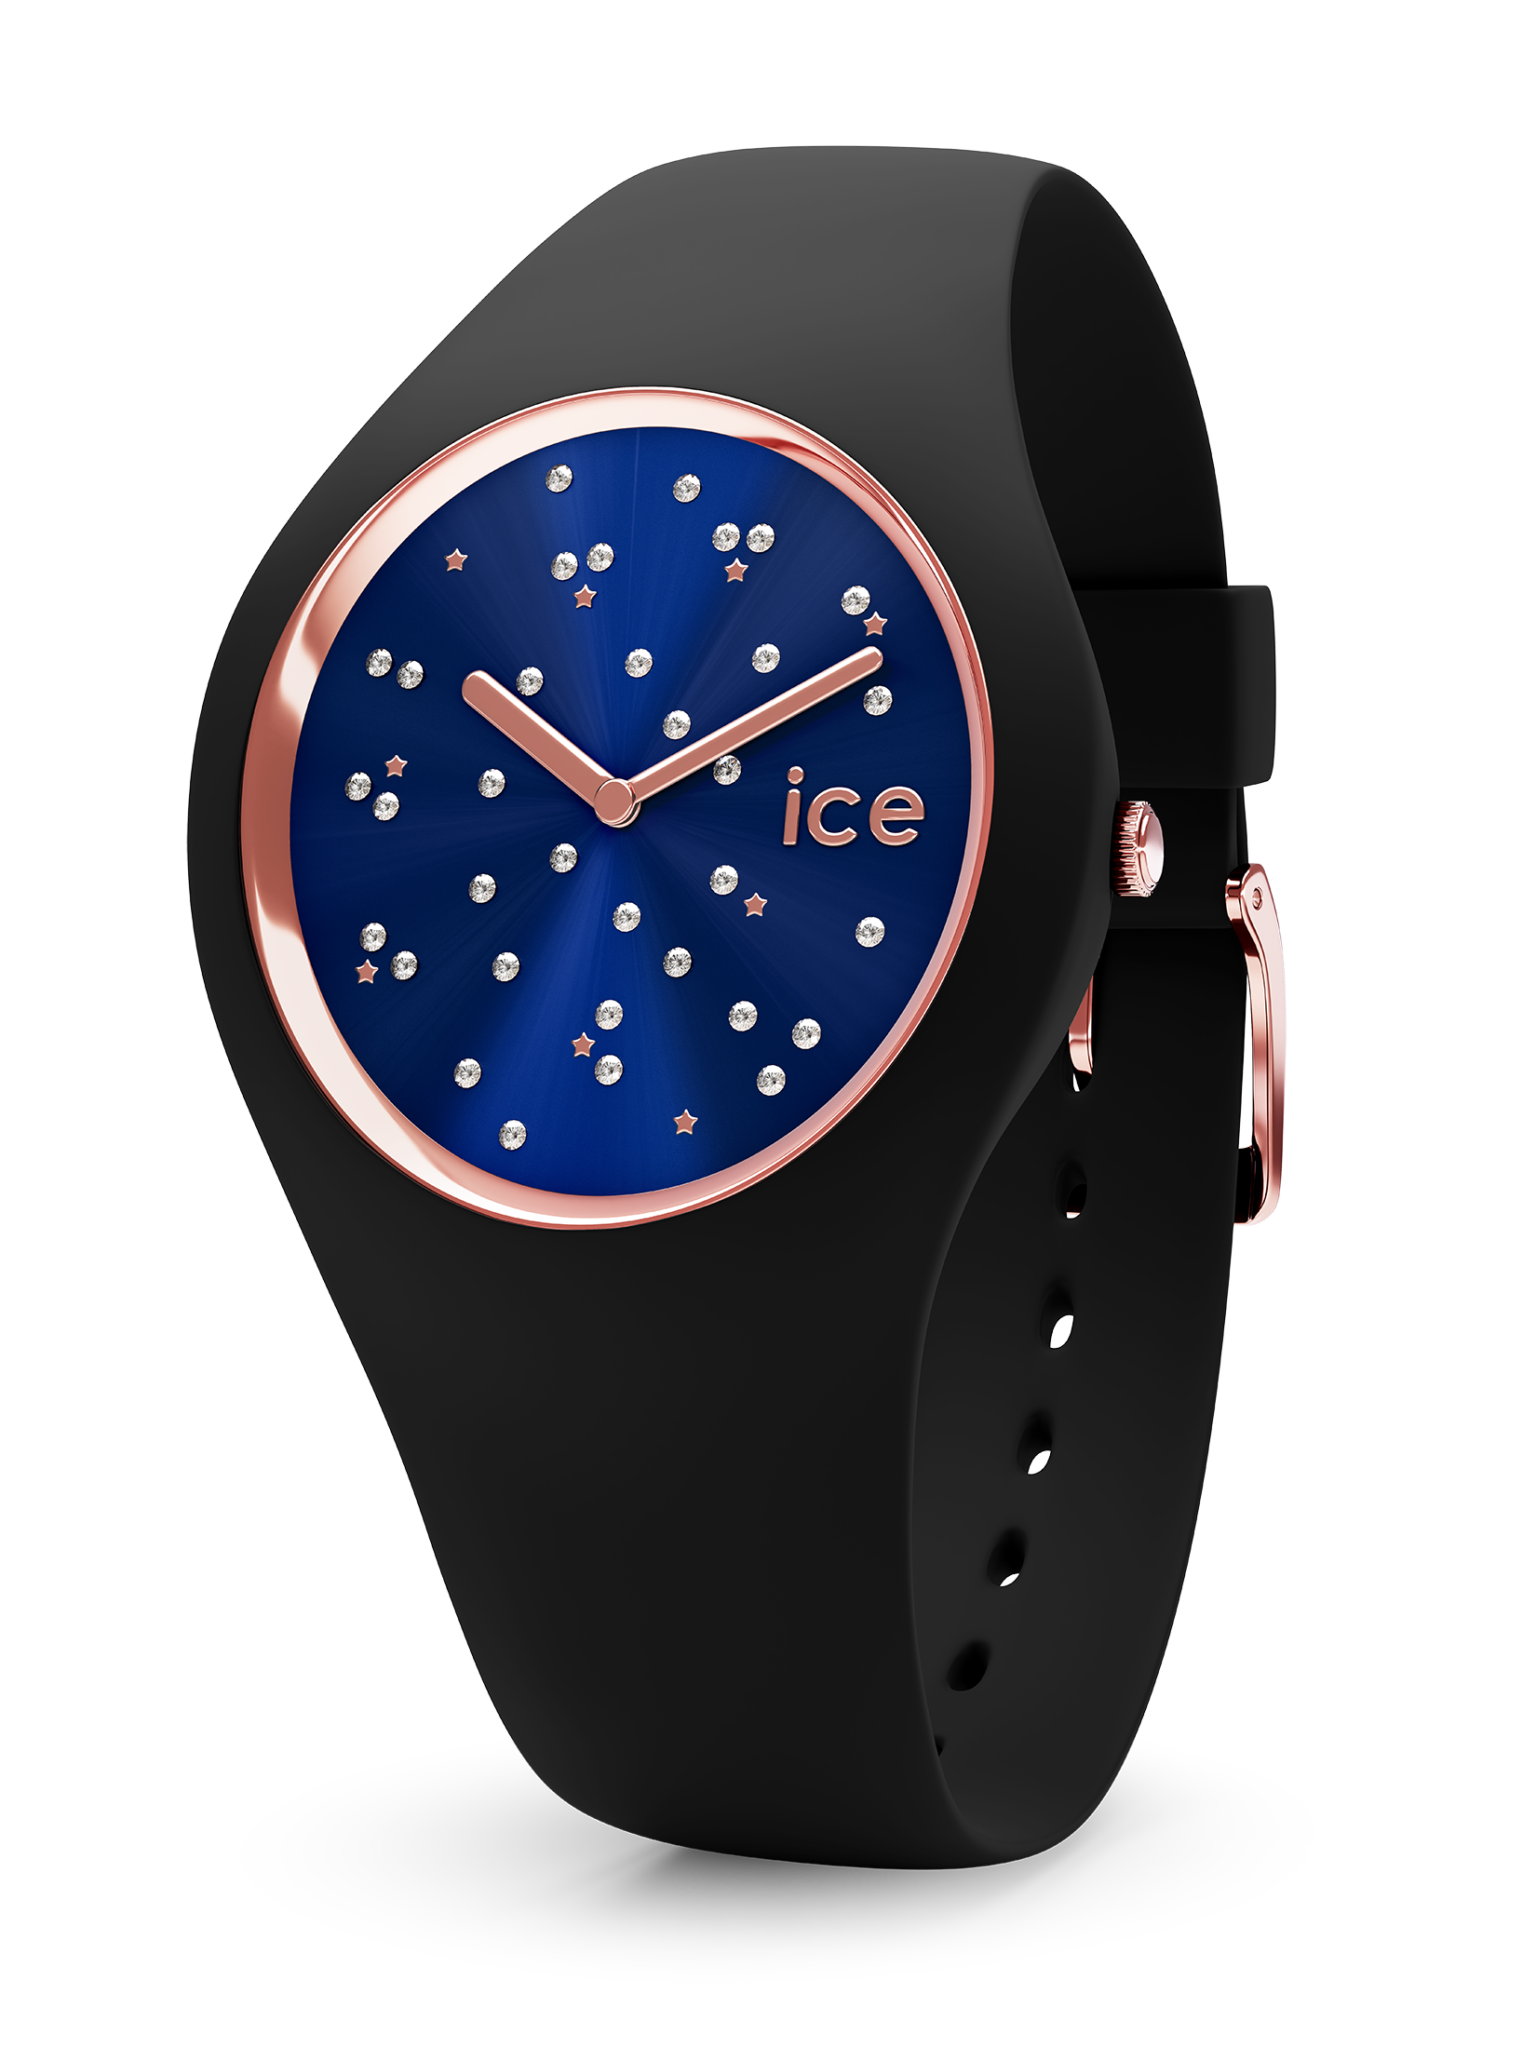 Ice watch часы. Часы айс вотч. Часы Cosmos Quartz наручные. Часы Ice Water Resistance. Часы "Ice Steel, 17929" Ice-watch.